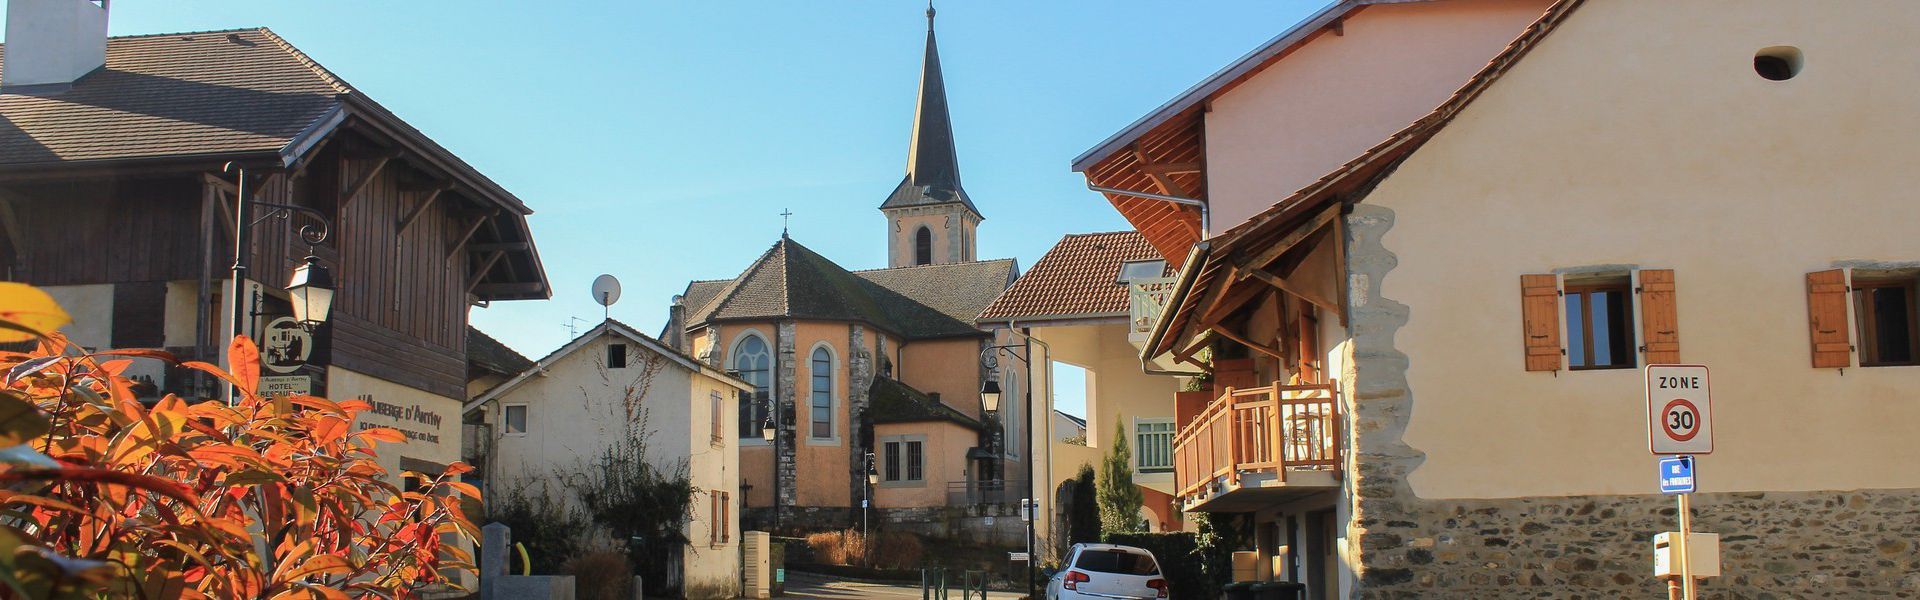 Anthy-sur-Léman, green city